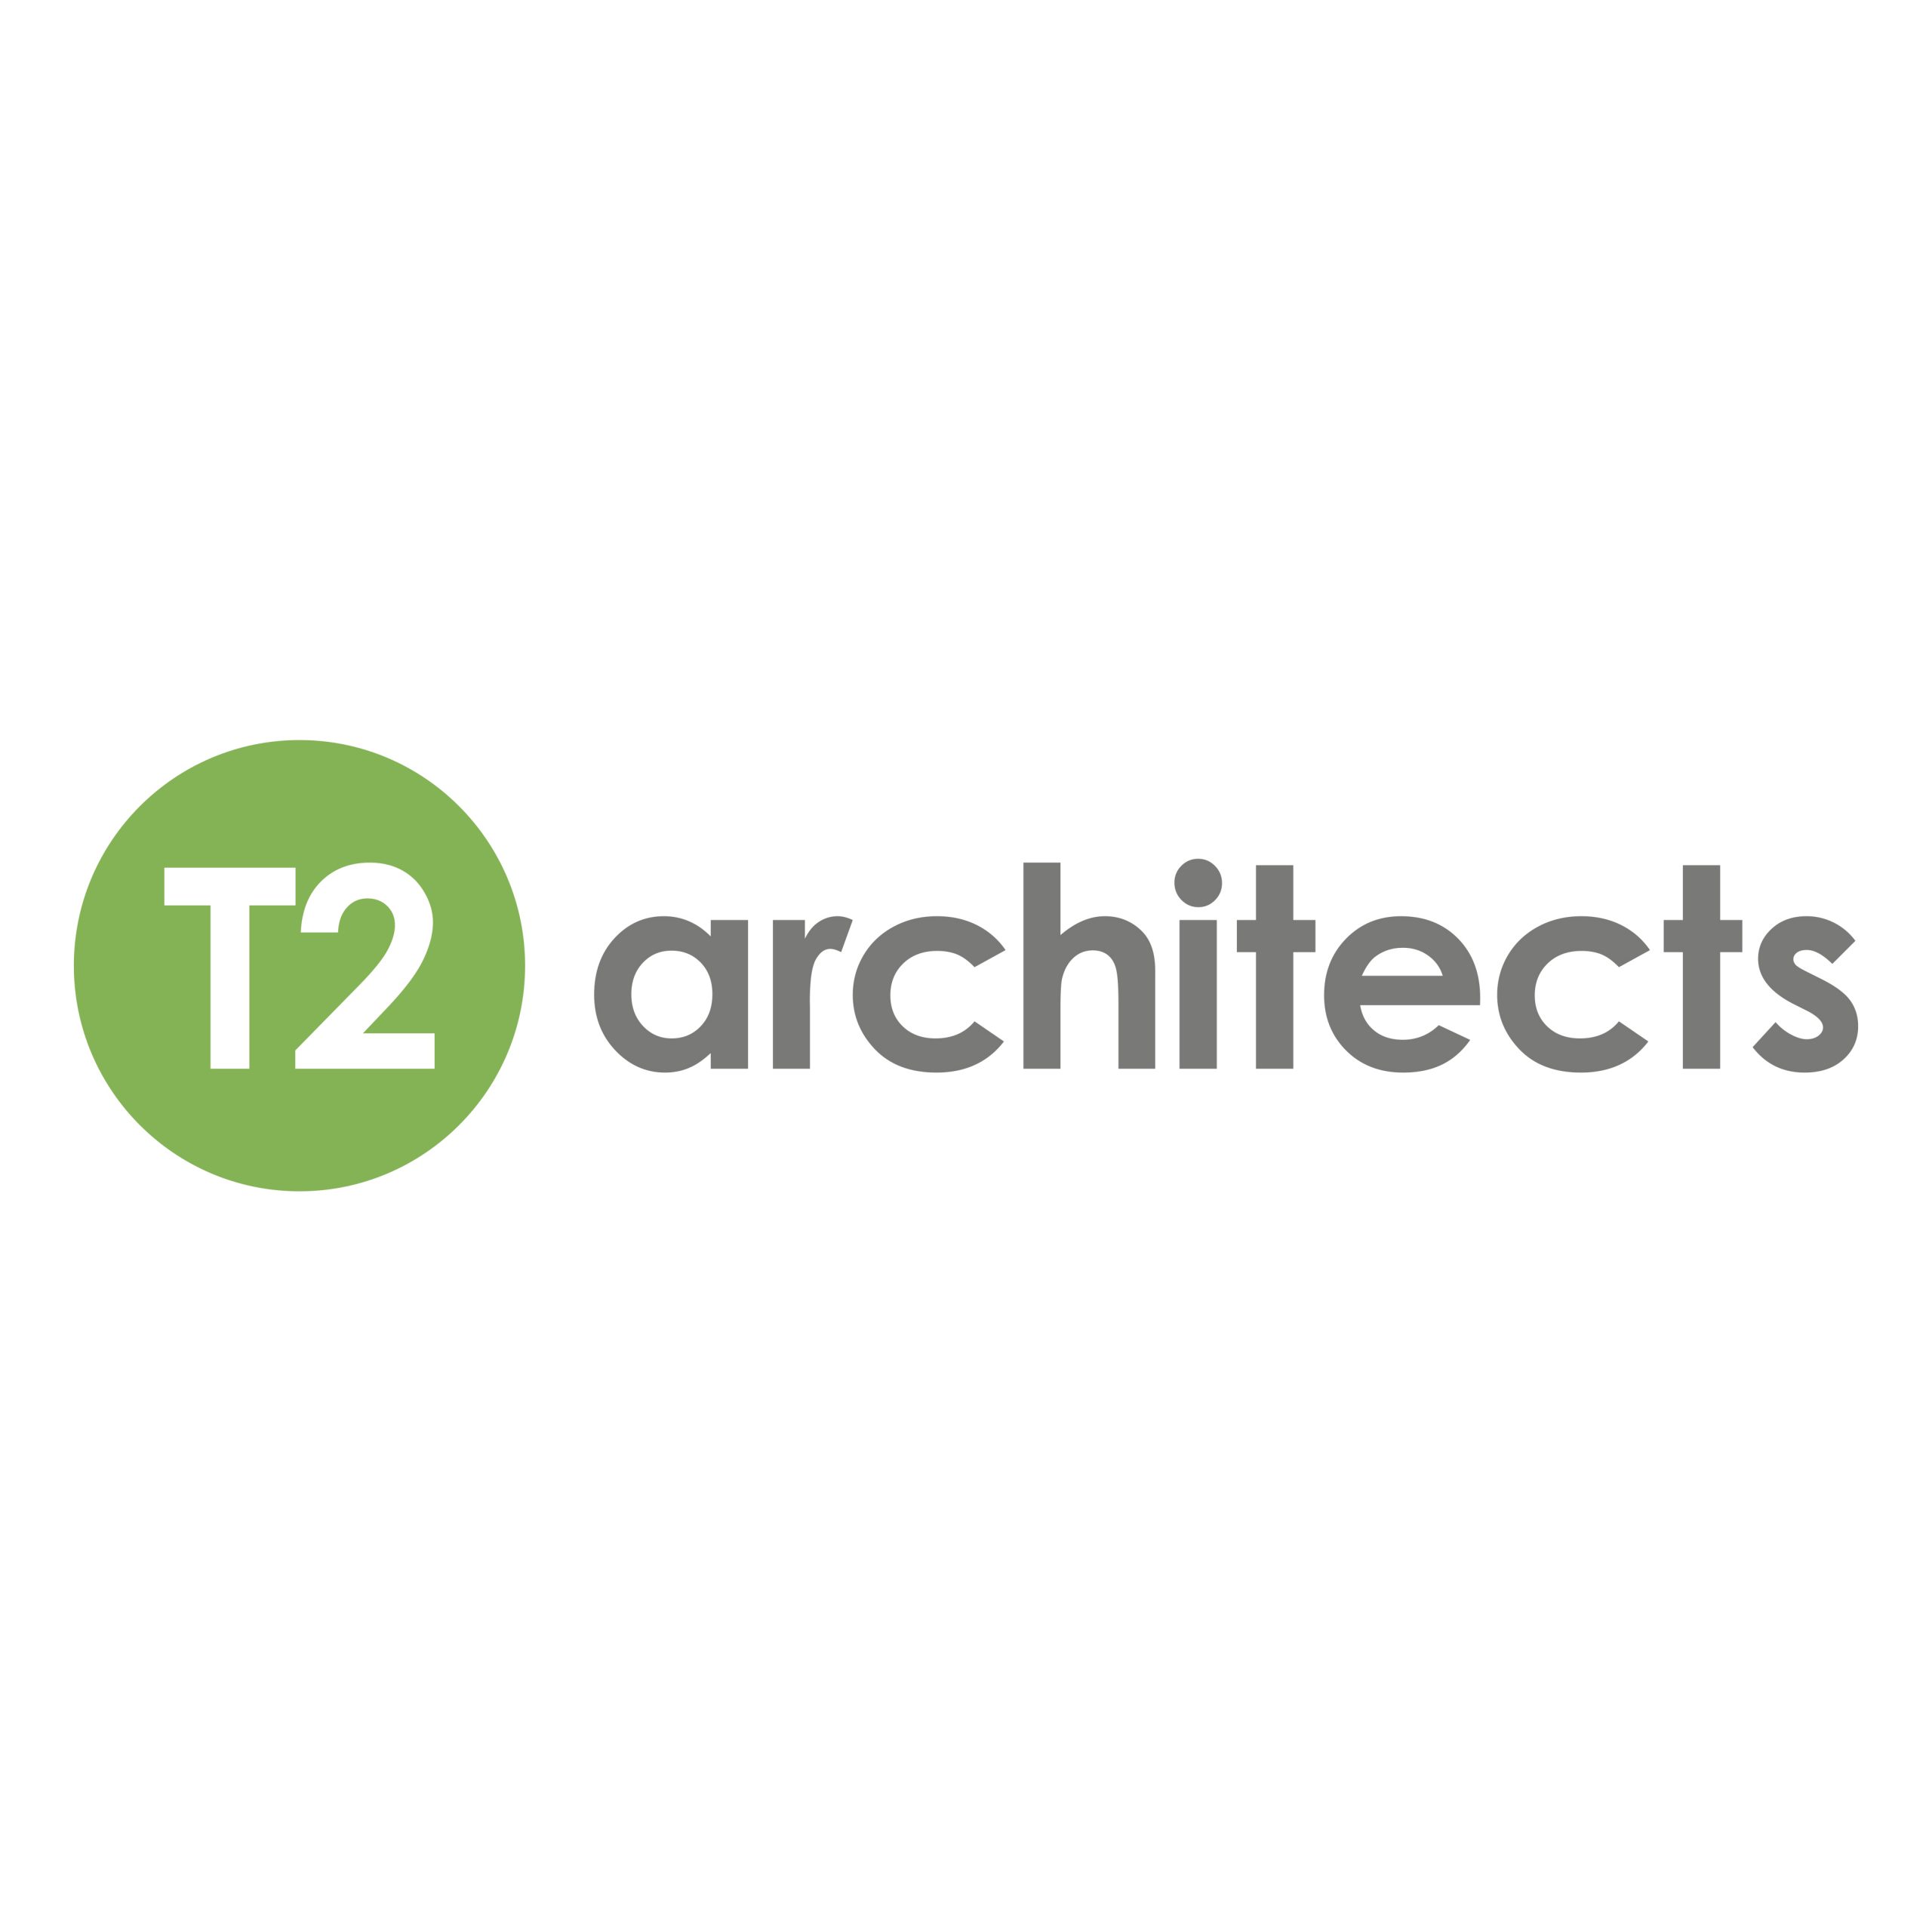 T2 architects